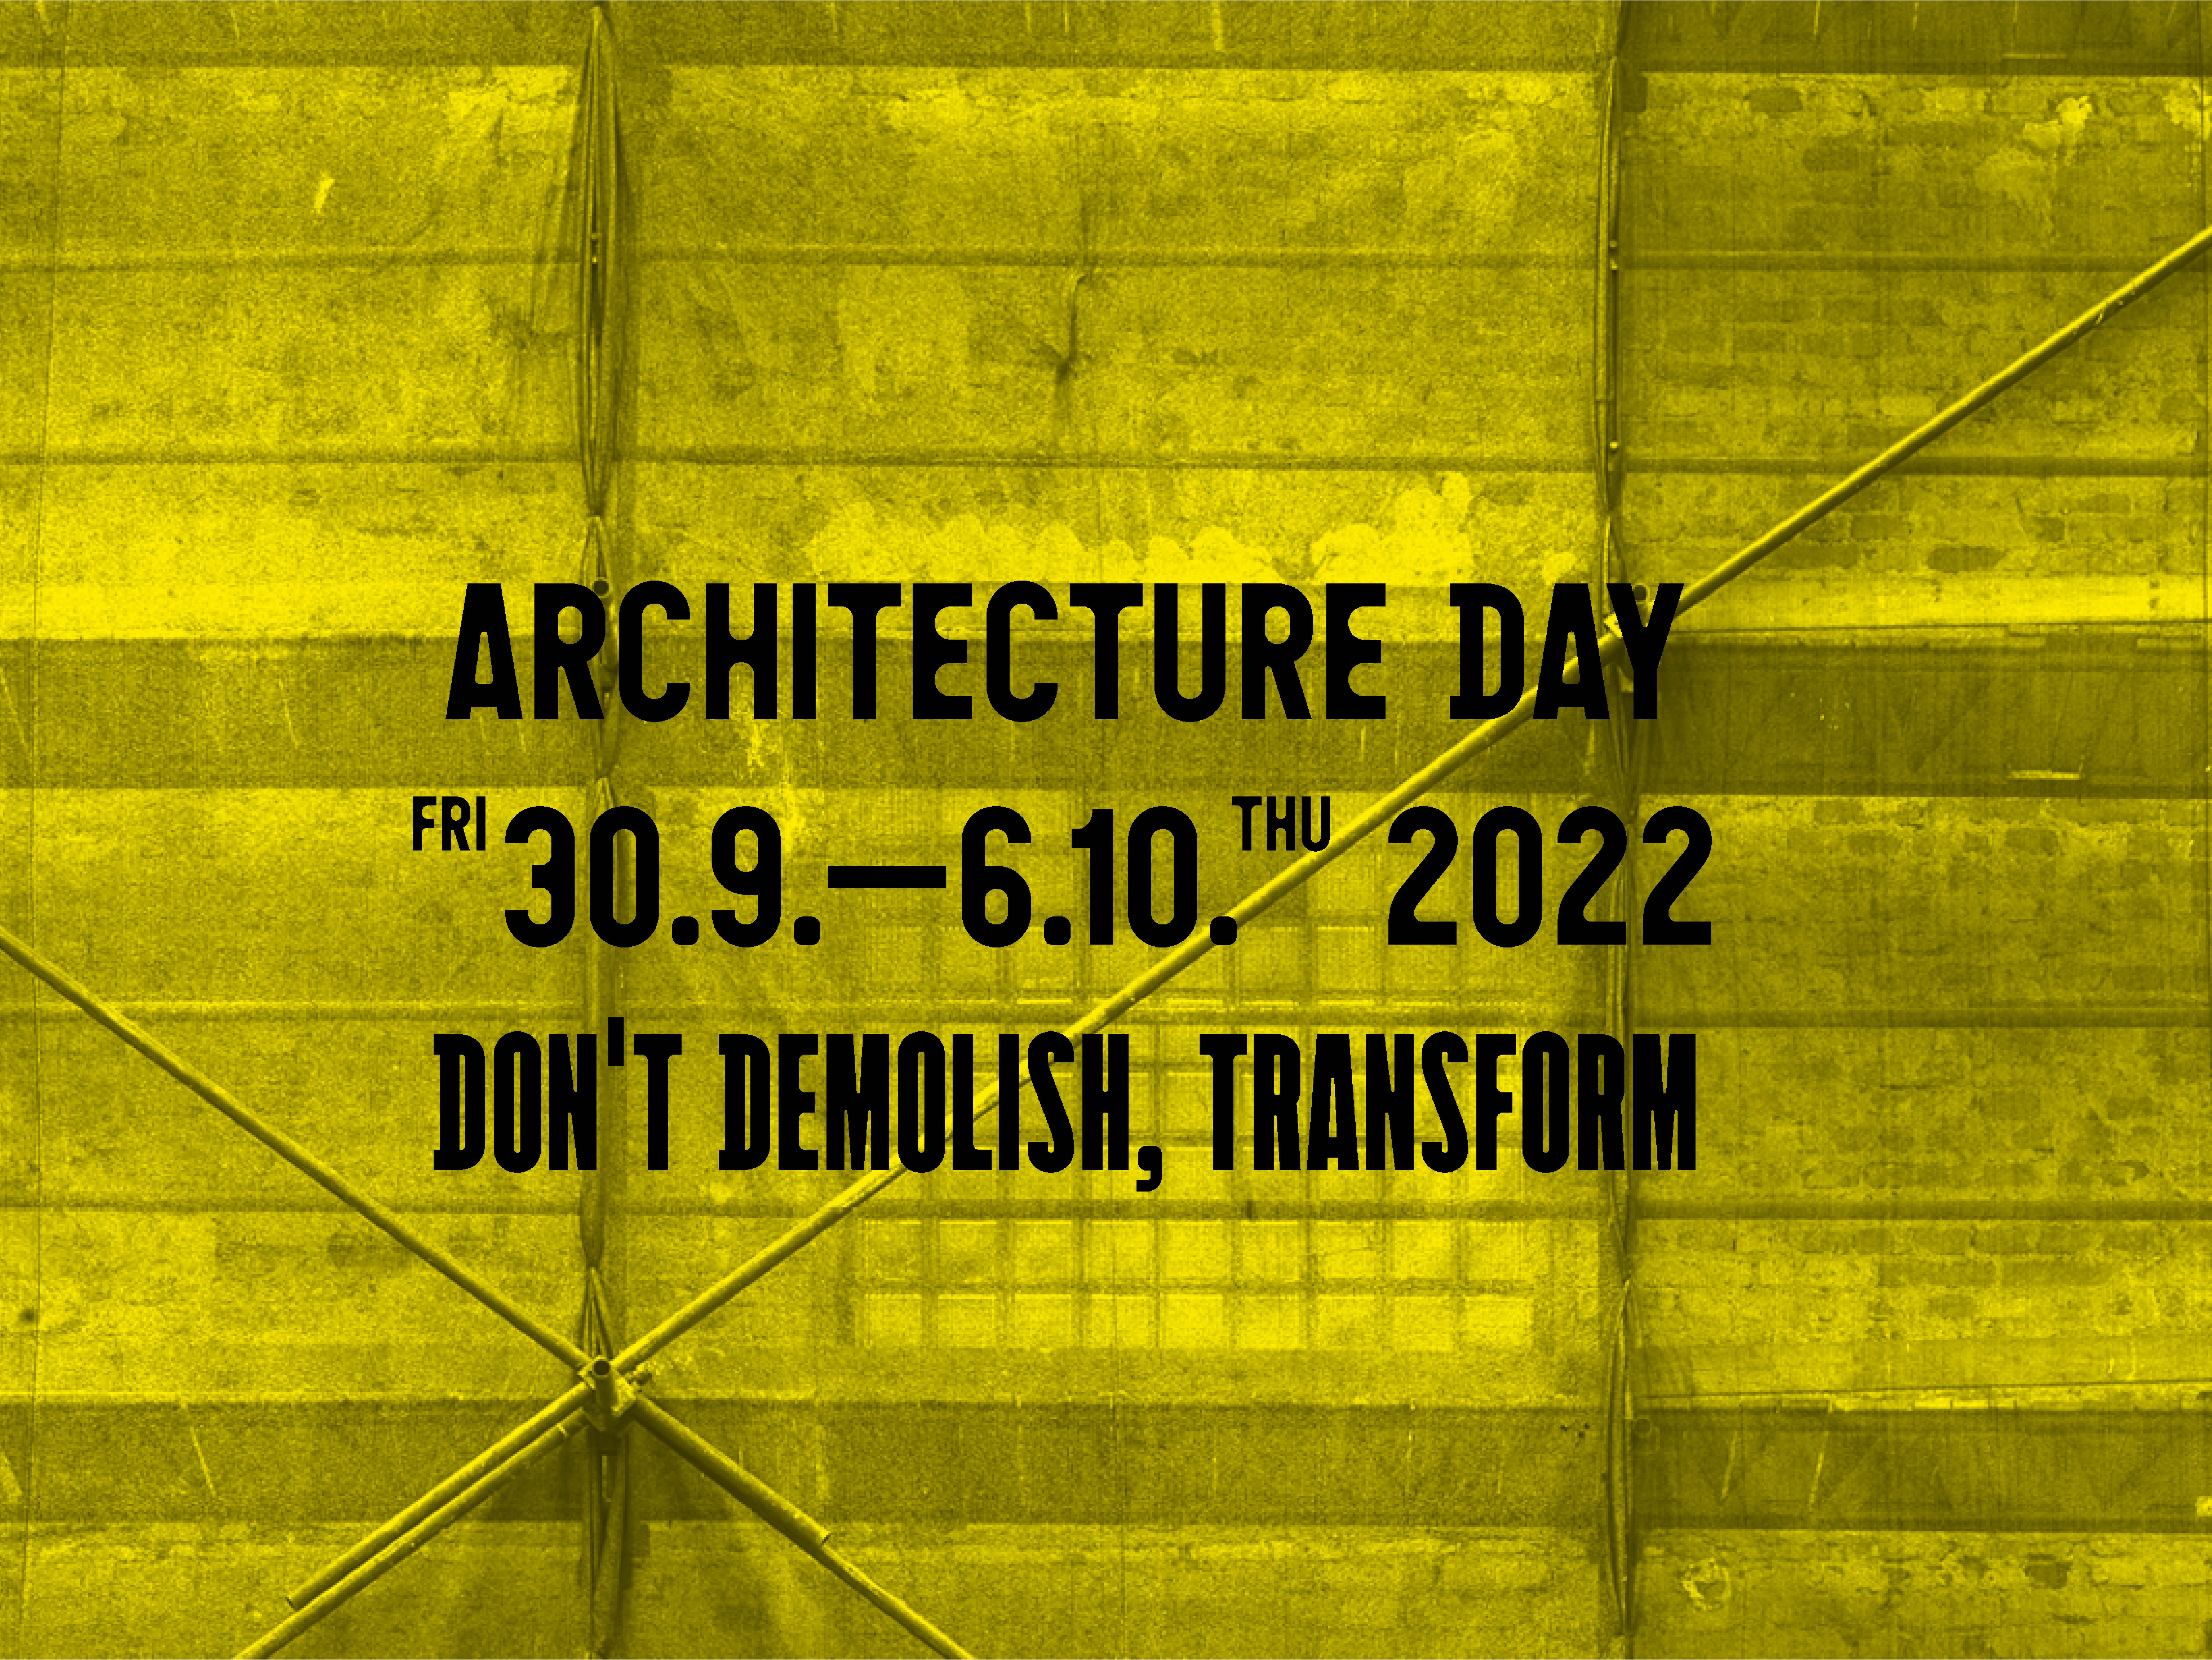 ARCHITECTURE DAY 2022